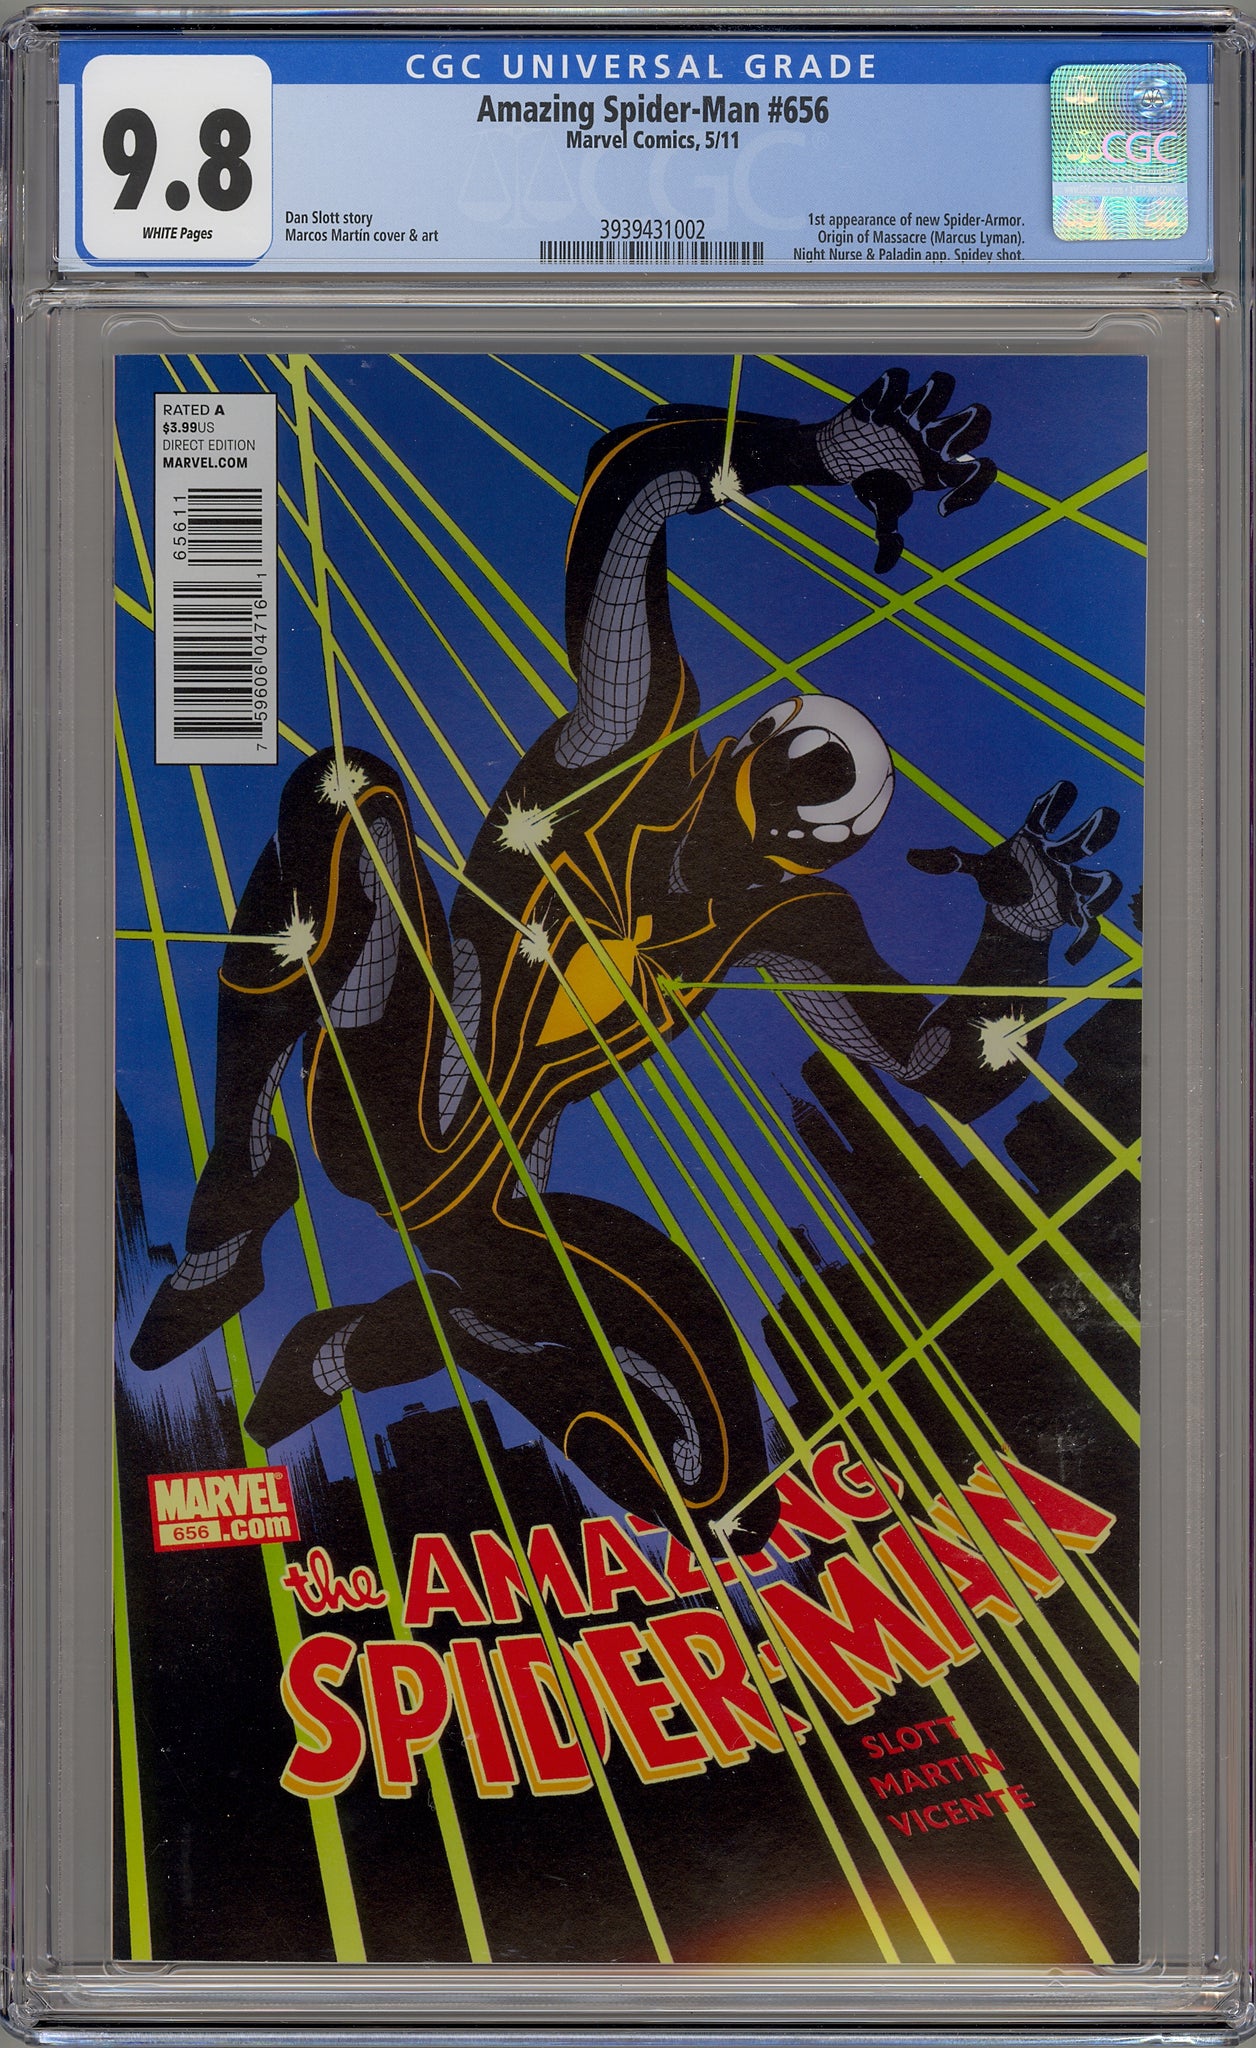 Amazing Spider-Man #656 (2011) Spider Armor, Massacre